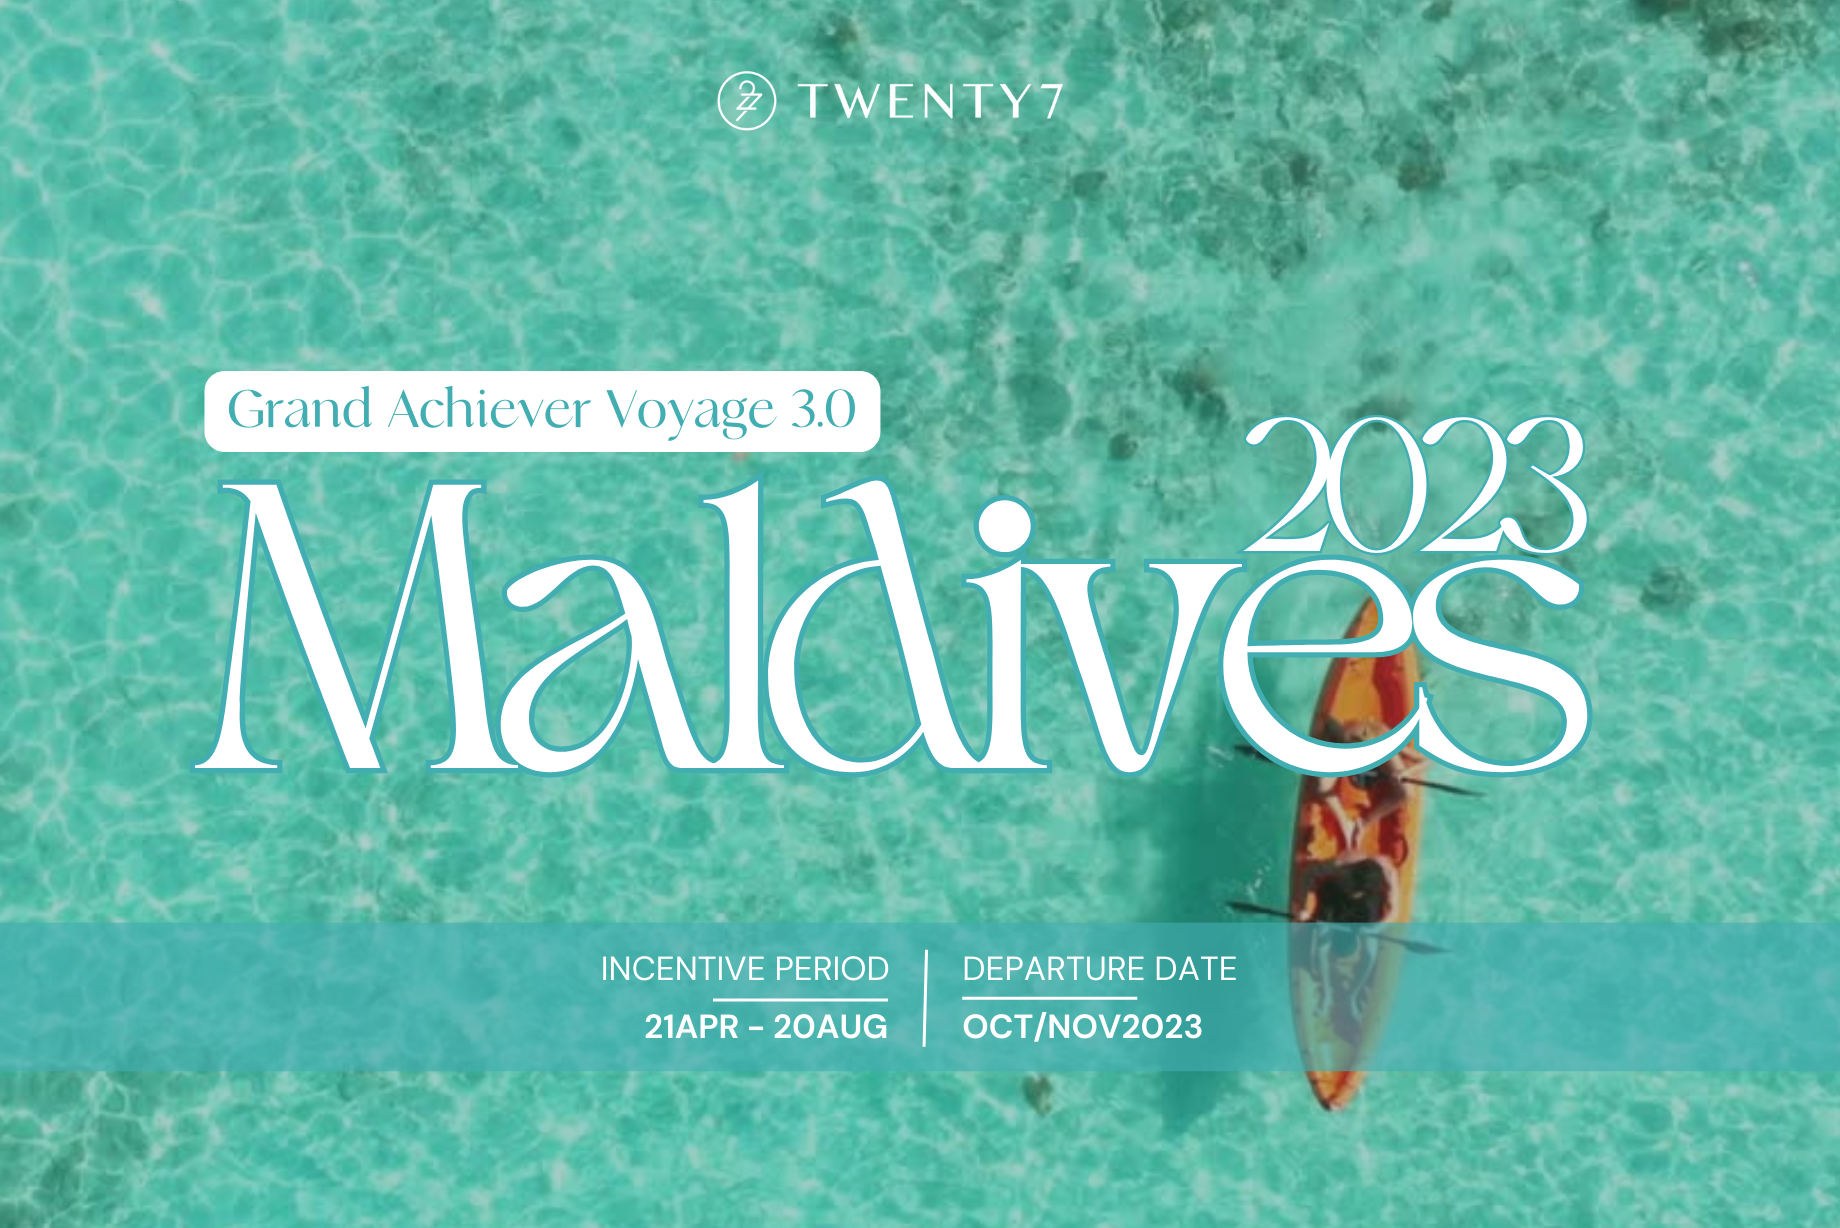 GRAND ACHIEVER VOYAGE 2023: TRIP TO MALDIVES